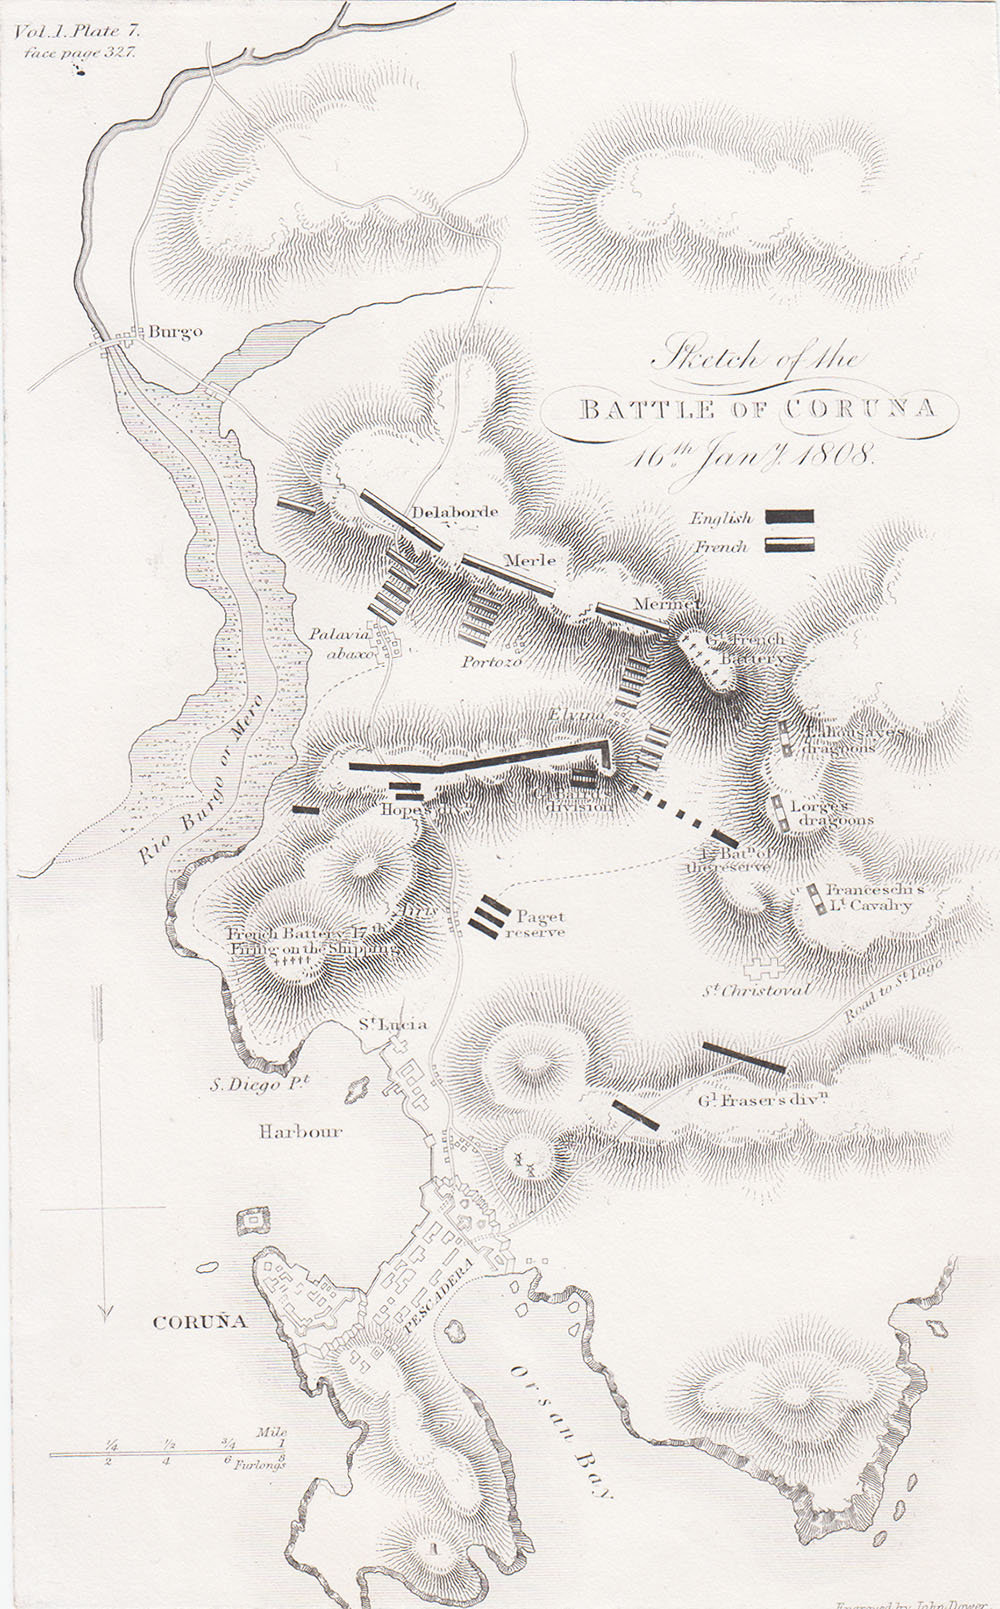 Sketch of the Battle of Coruna 16th Jan 1808